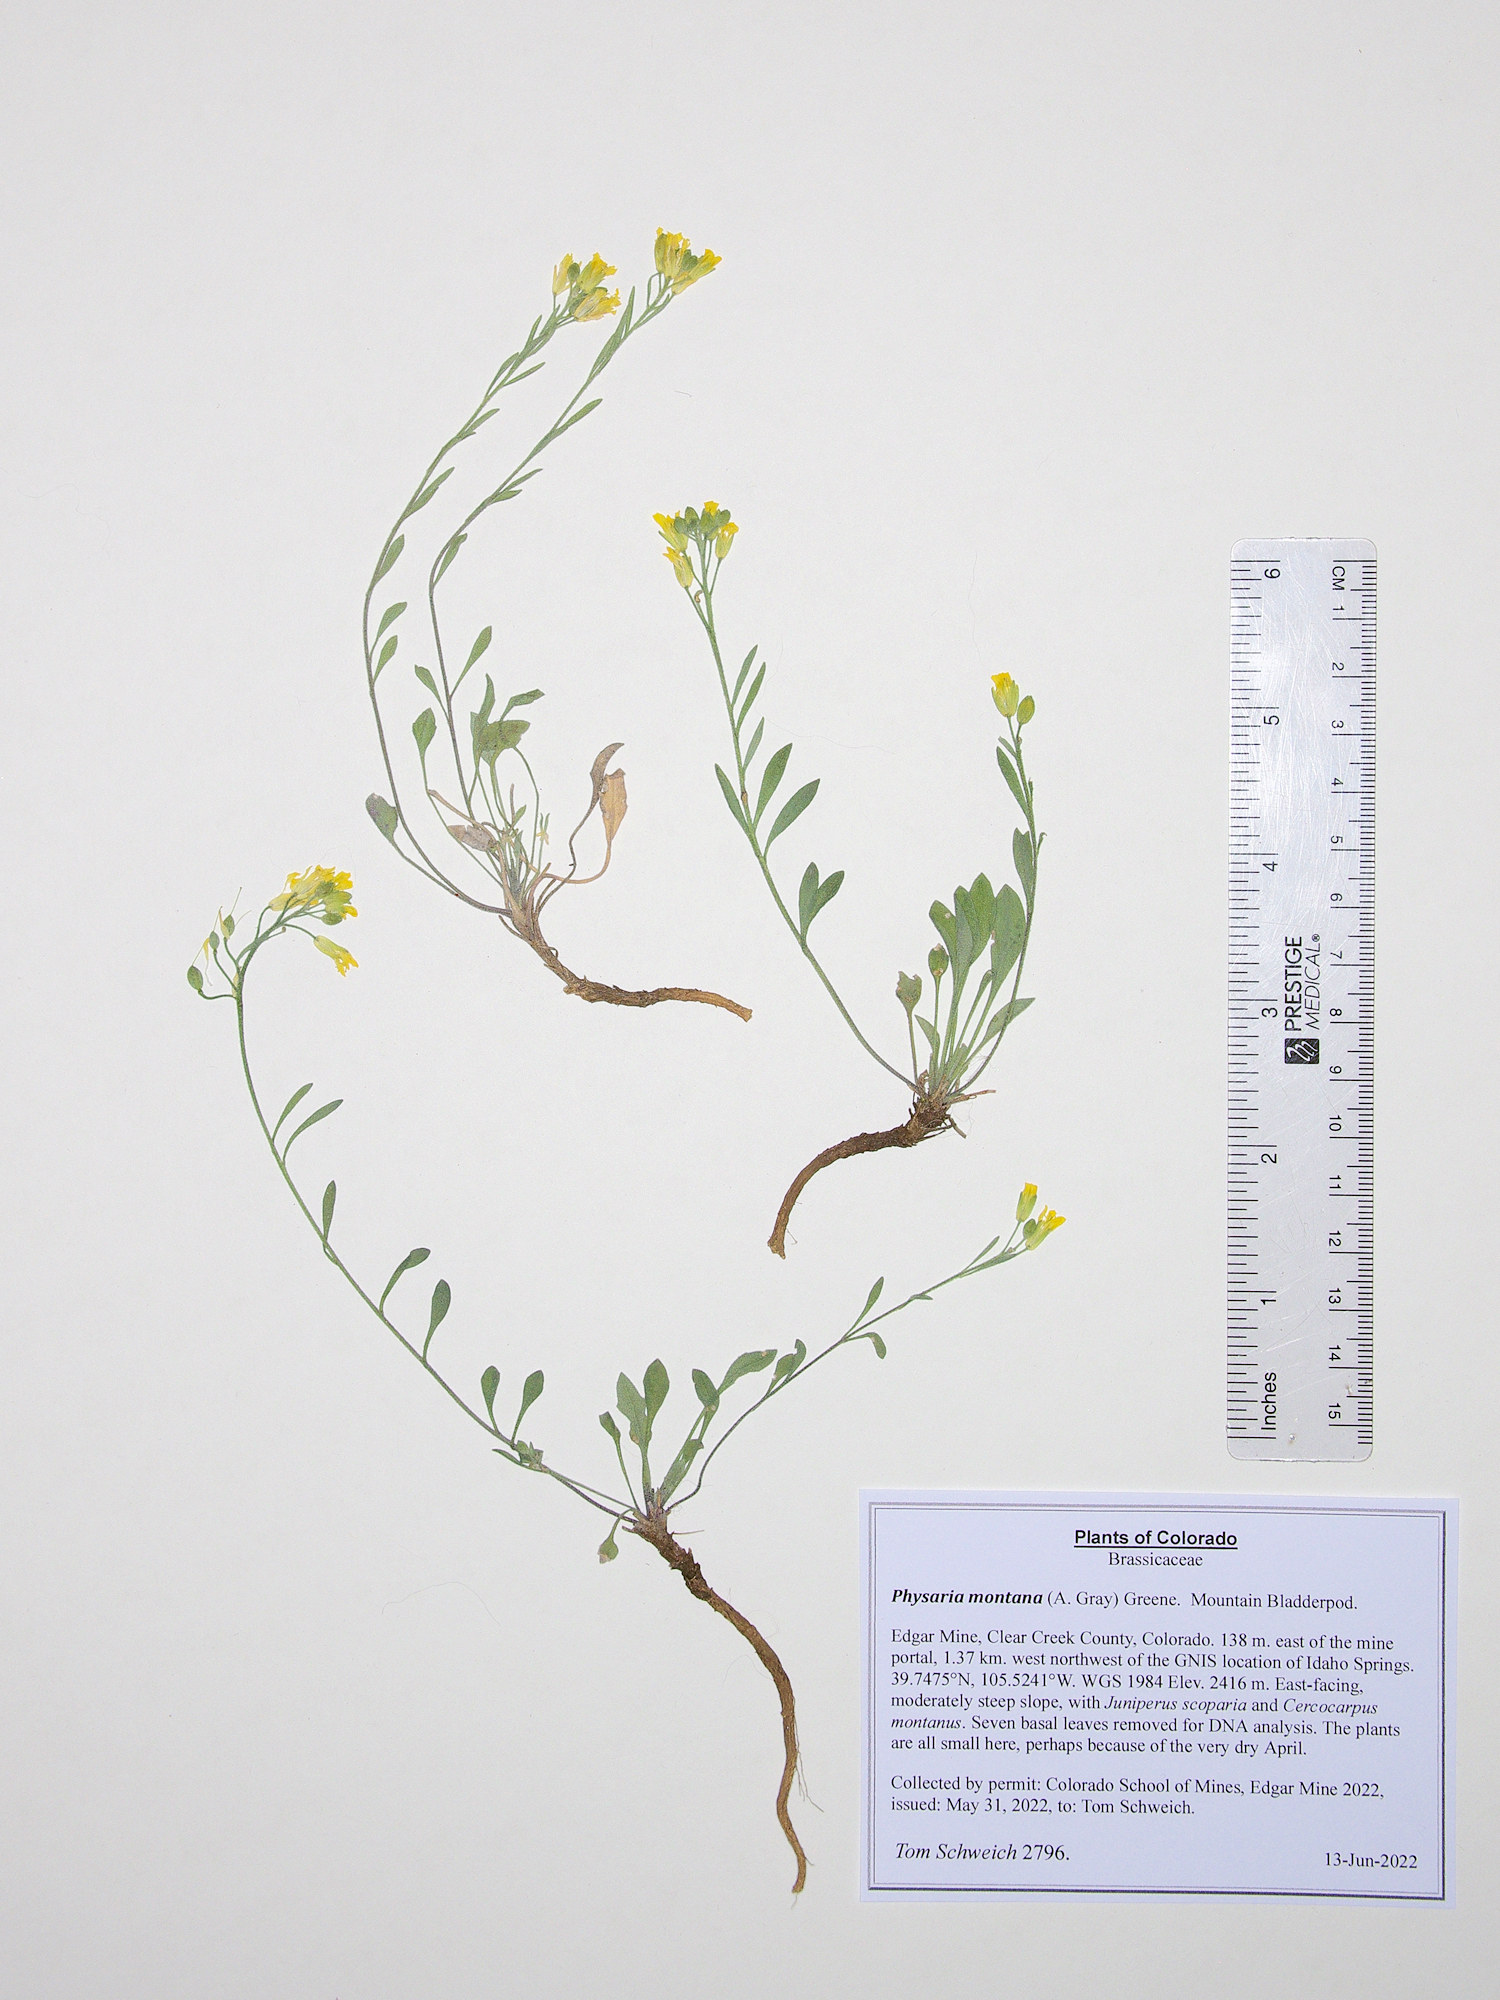 Brassicaceae Physaria montana